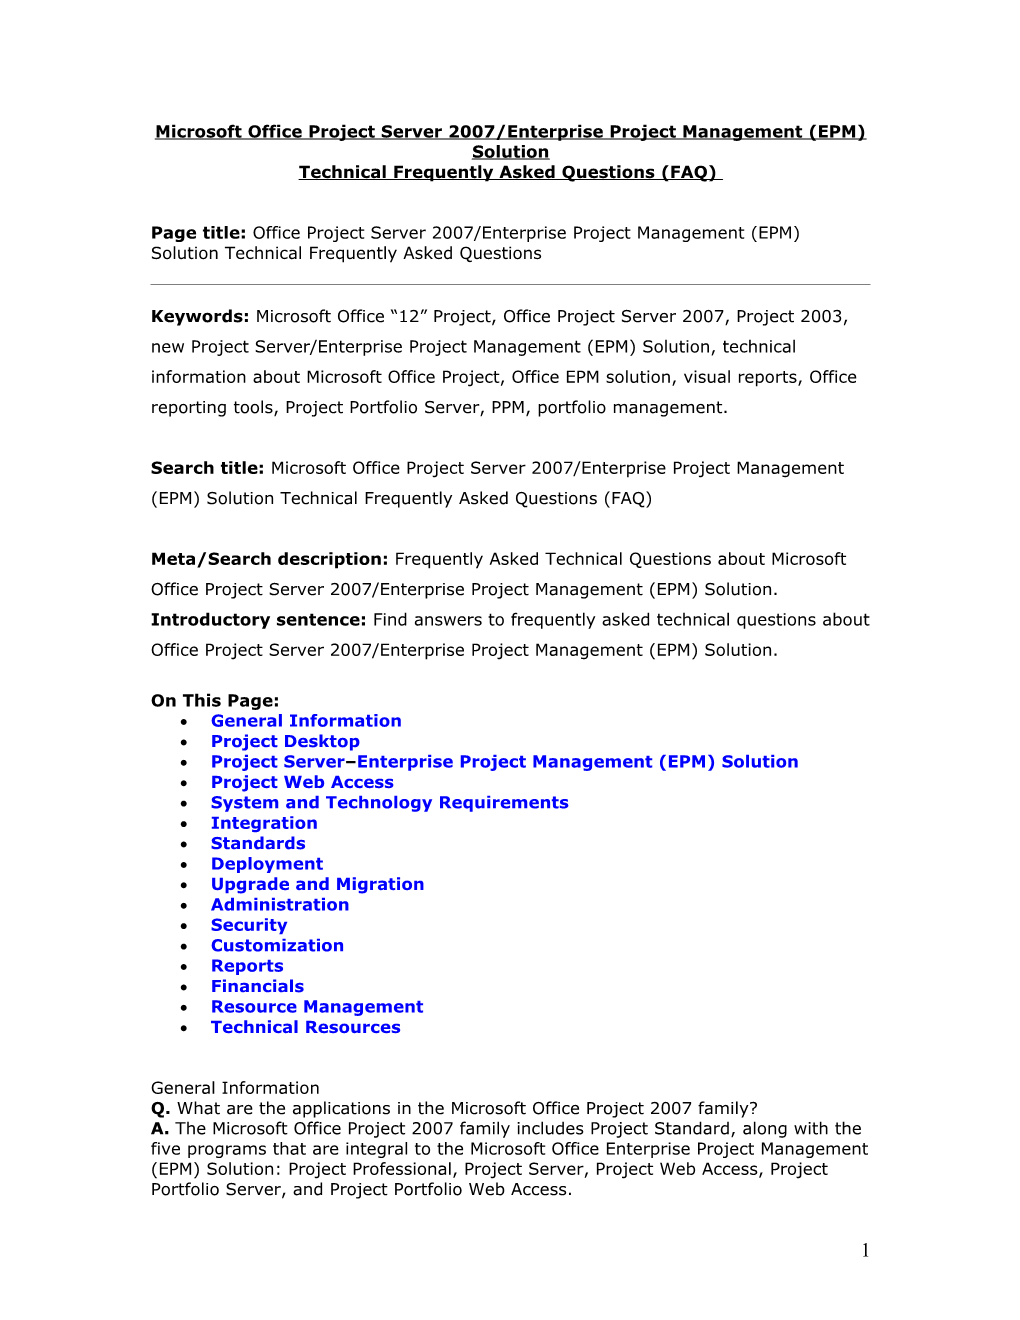 Microsoft Office Project Server 2007/Enterprise Project Management (EPM) Solution